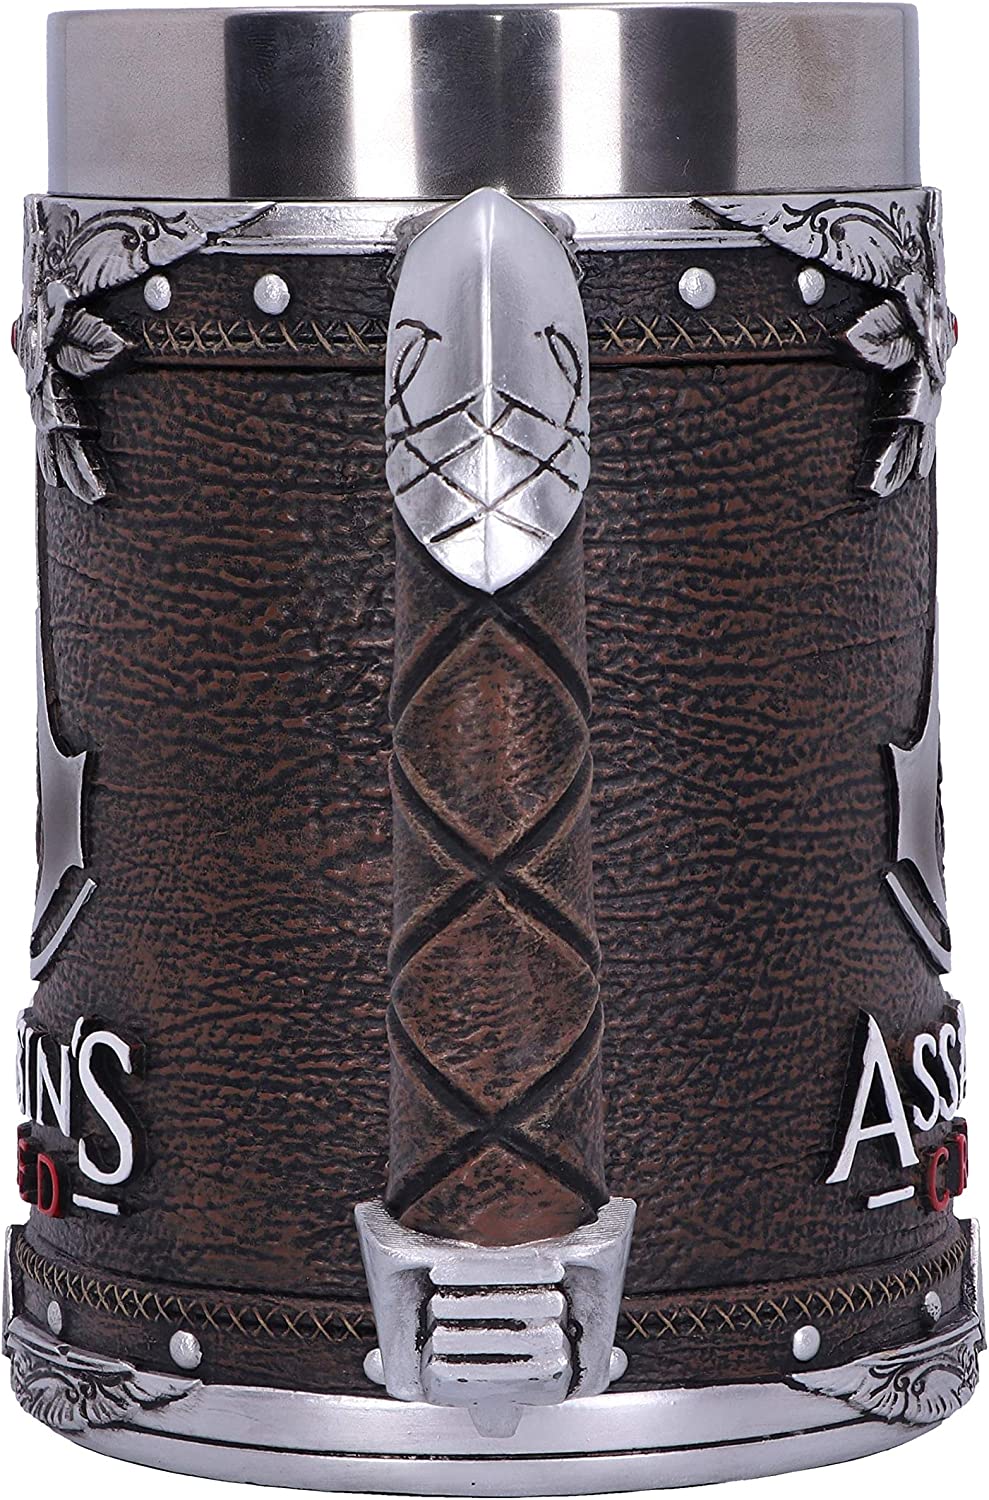 Officially Licensed Assassins Creed Brotherhood Brown Hidden Blade Game Tankard, Resin, 15.5cm